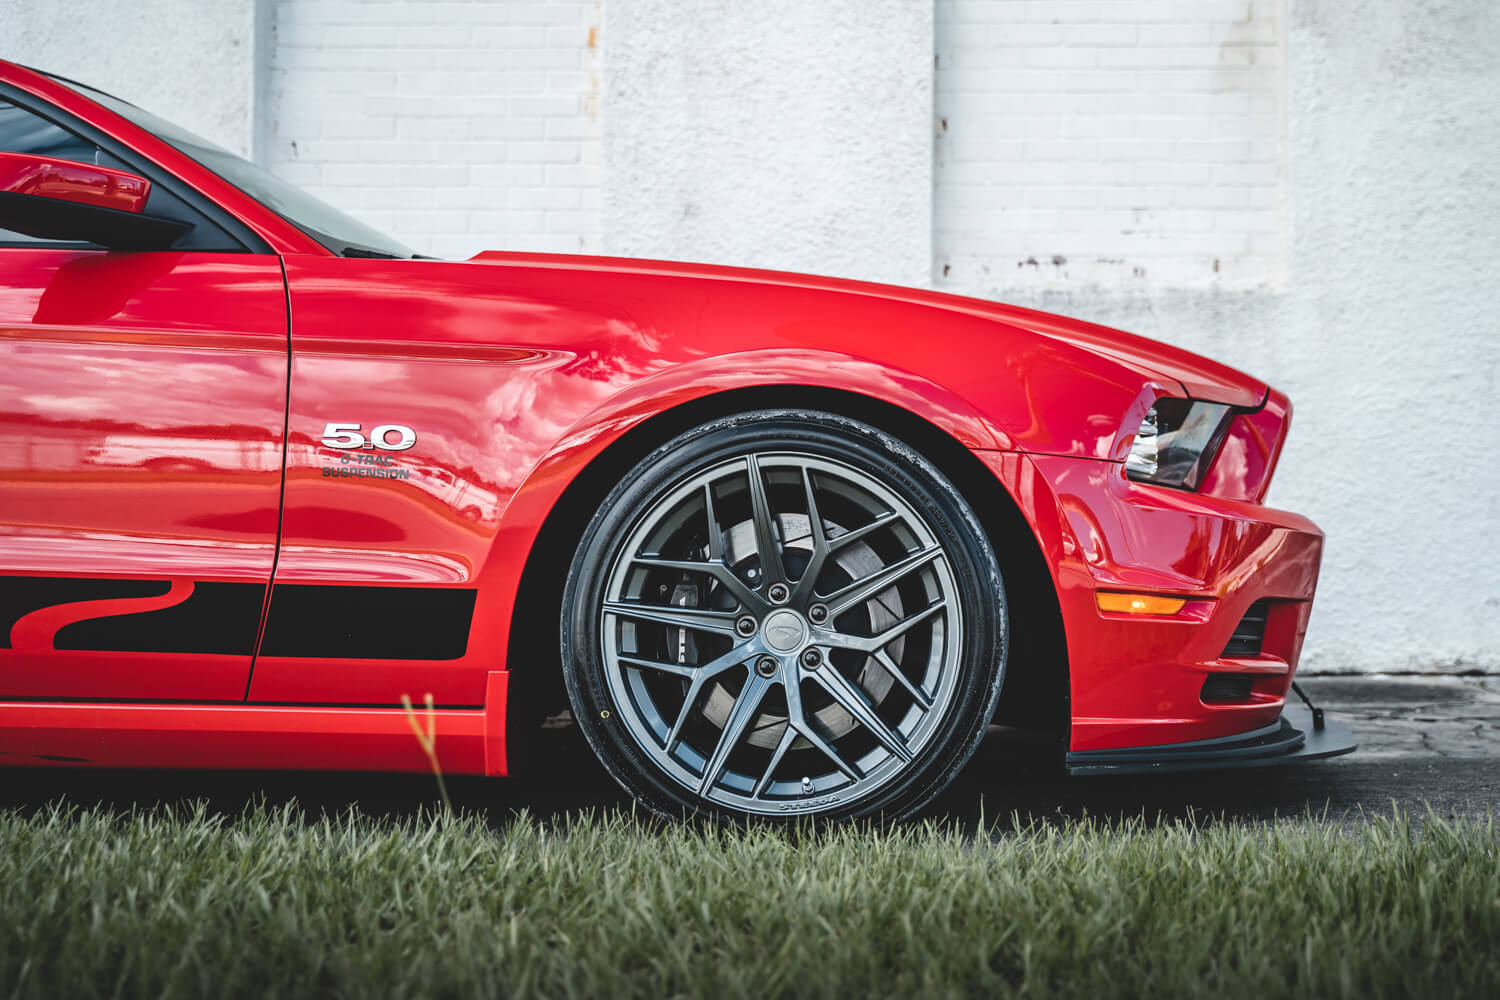 2013 Mustang GT Steeda Trident Wheels Gloss Titanium Photo 3